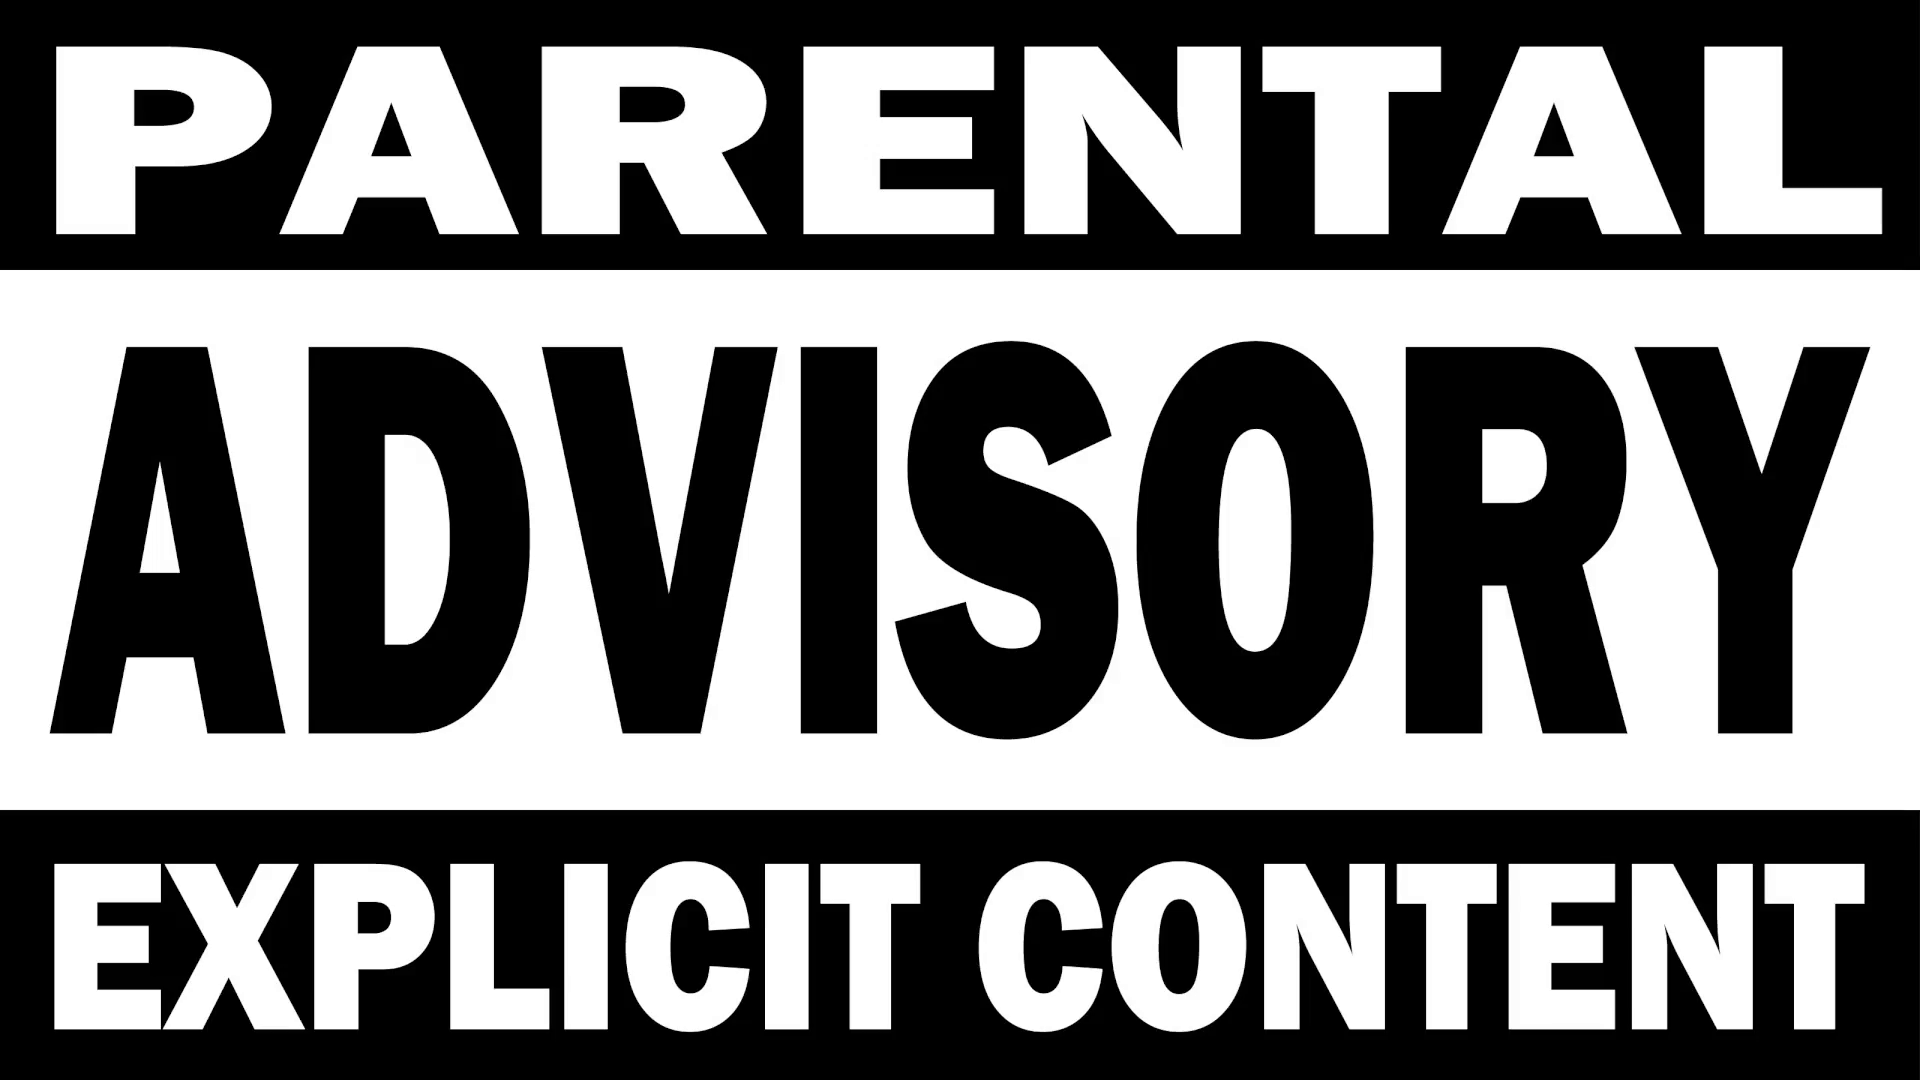 Content warning all monsters. Значок Advisory. Парентал Адвизори. Parental Advisory Explicit content. Значок parental Advisory.